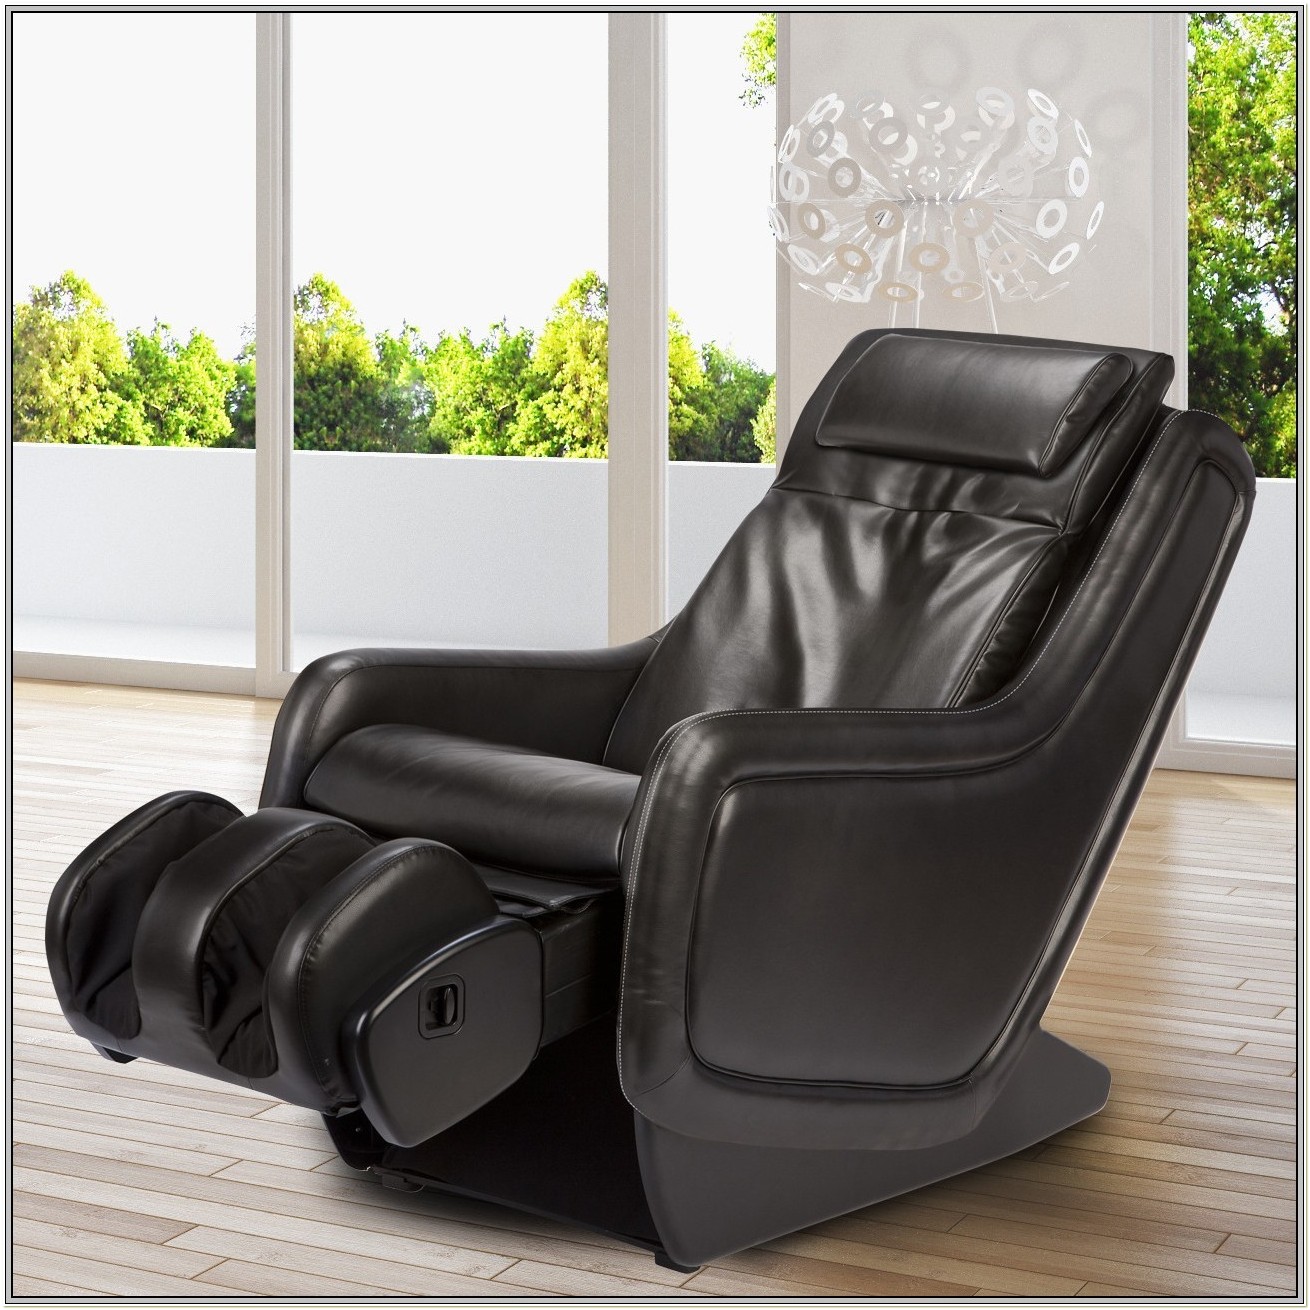 Best Zero Gravity Massage Chair 2014 - Chairs : Home Decorating Ideas #